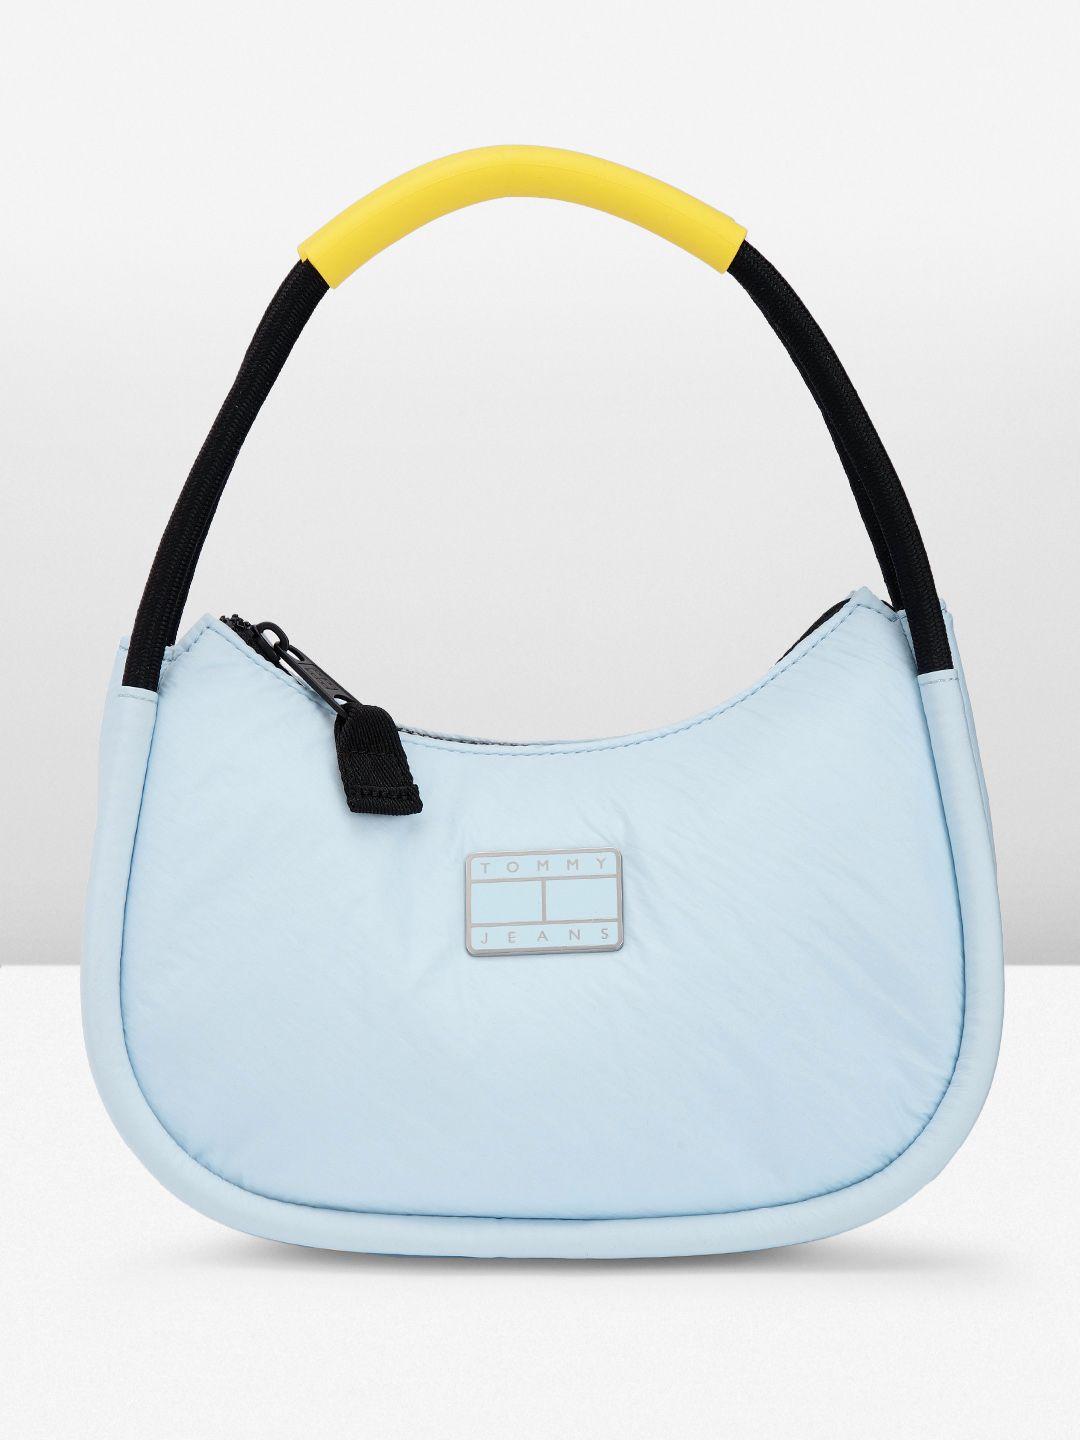 tommy hilfiger solid structured hobo bag with brand logo detail